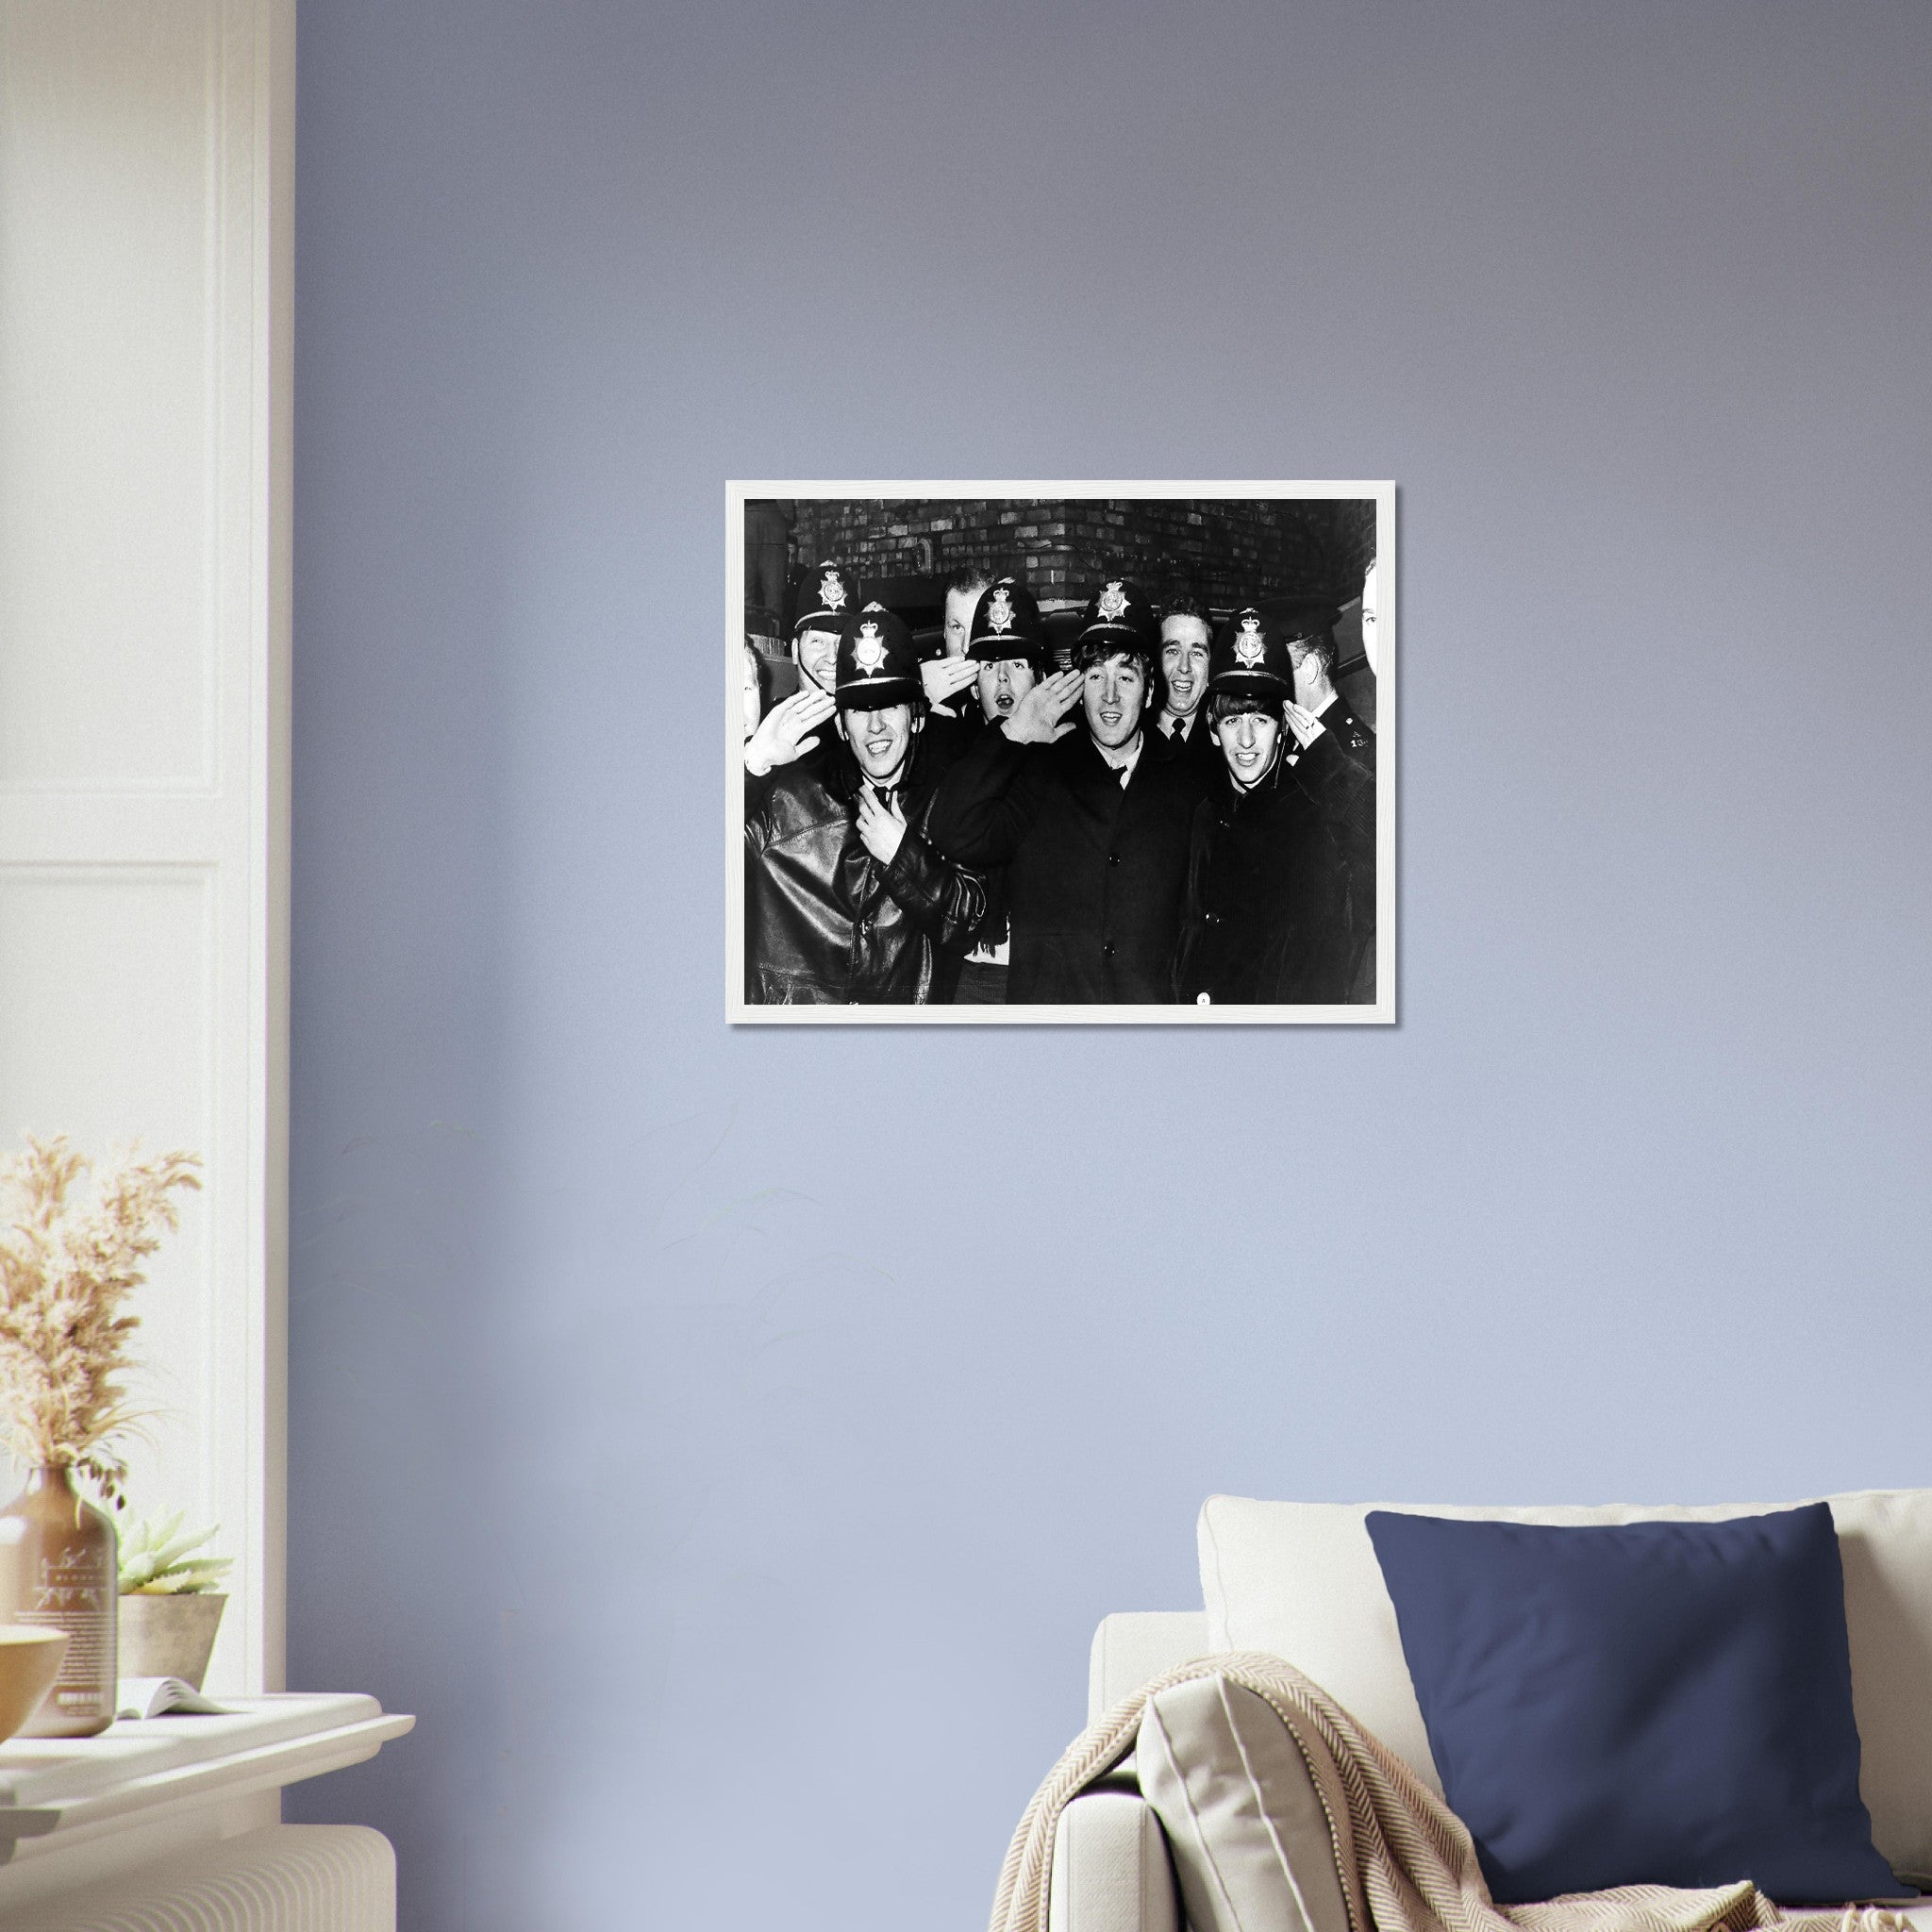 The Beatles Framed, Posing With Police, Vintage Photo Portrait - The Beatles Birmingham Hippodrome - WallArtPrints4U